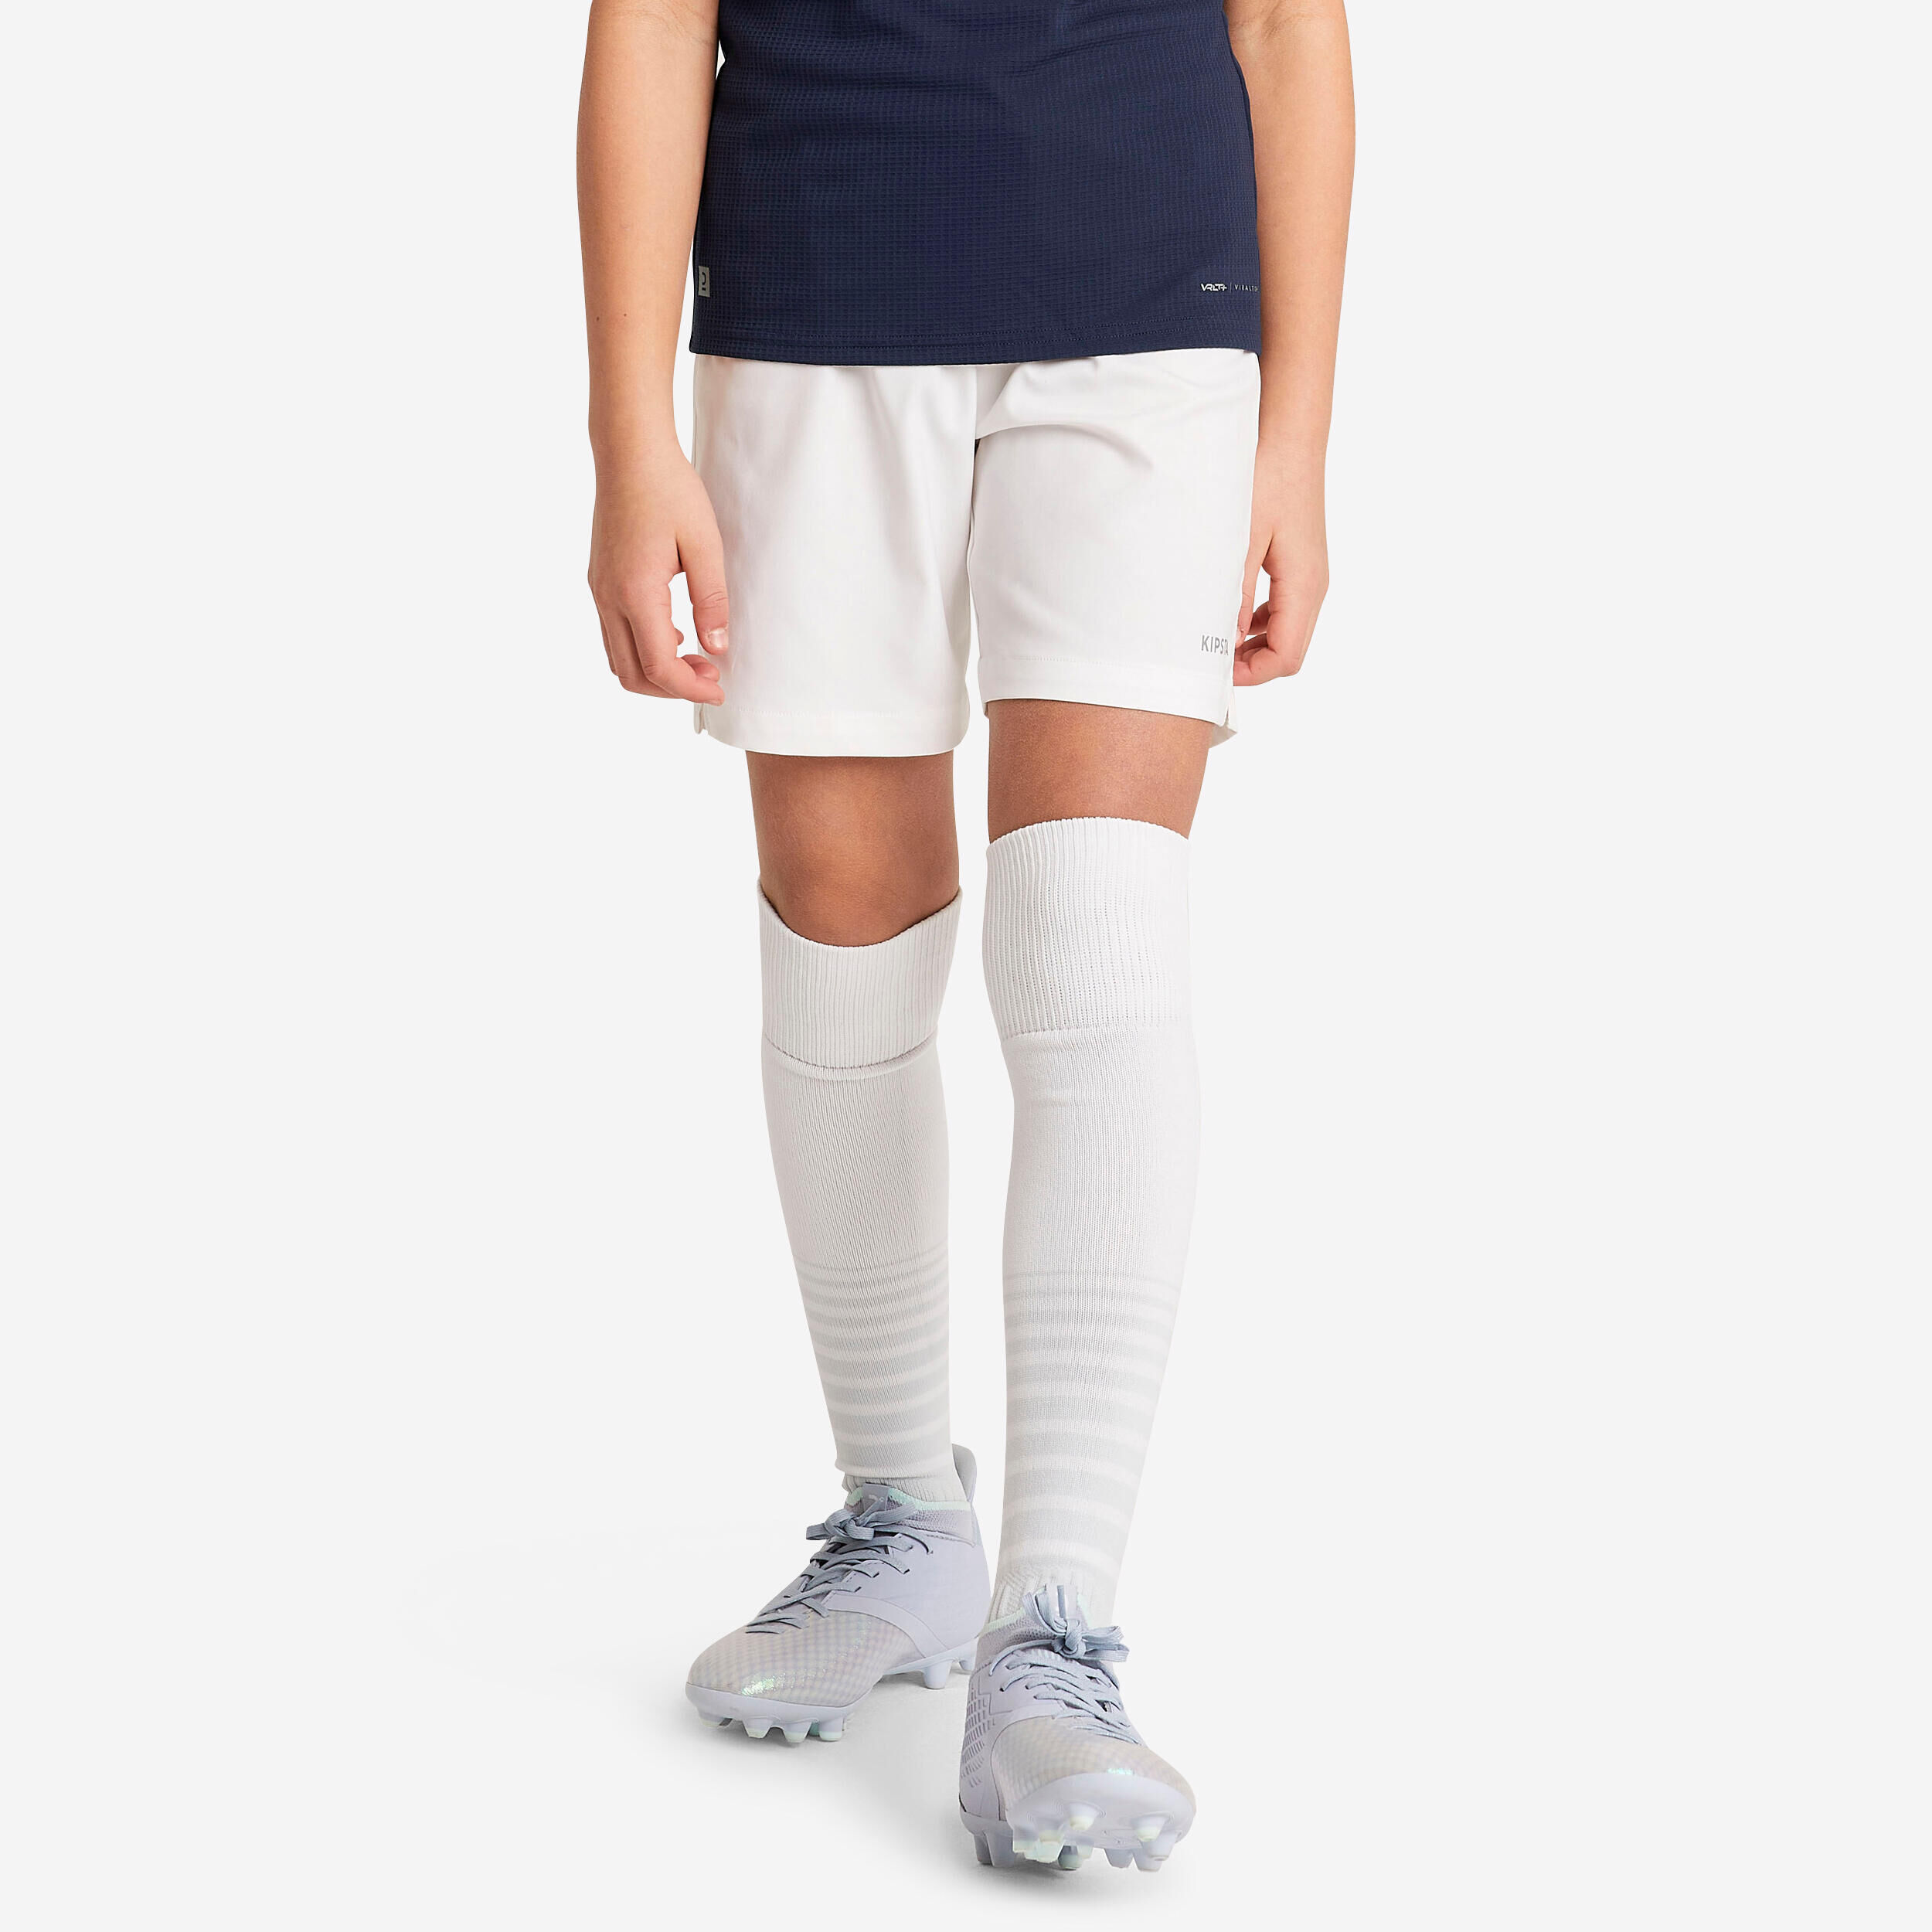 KIPSTA Girls' Football Shorts  - White